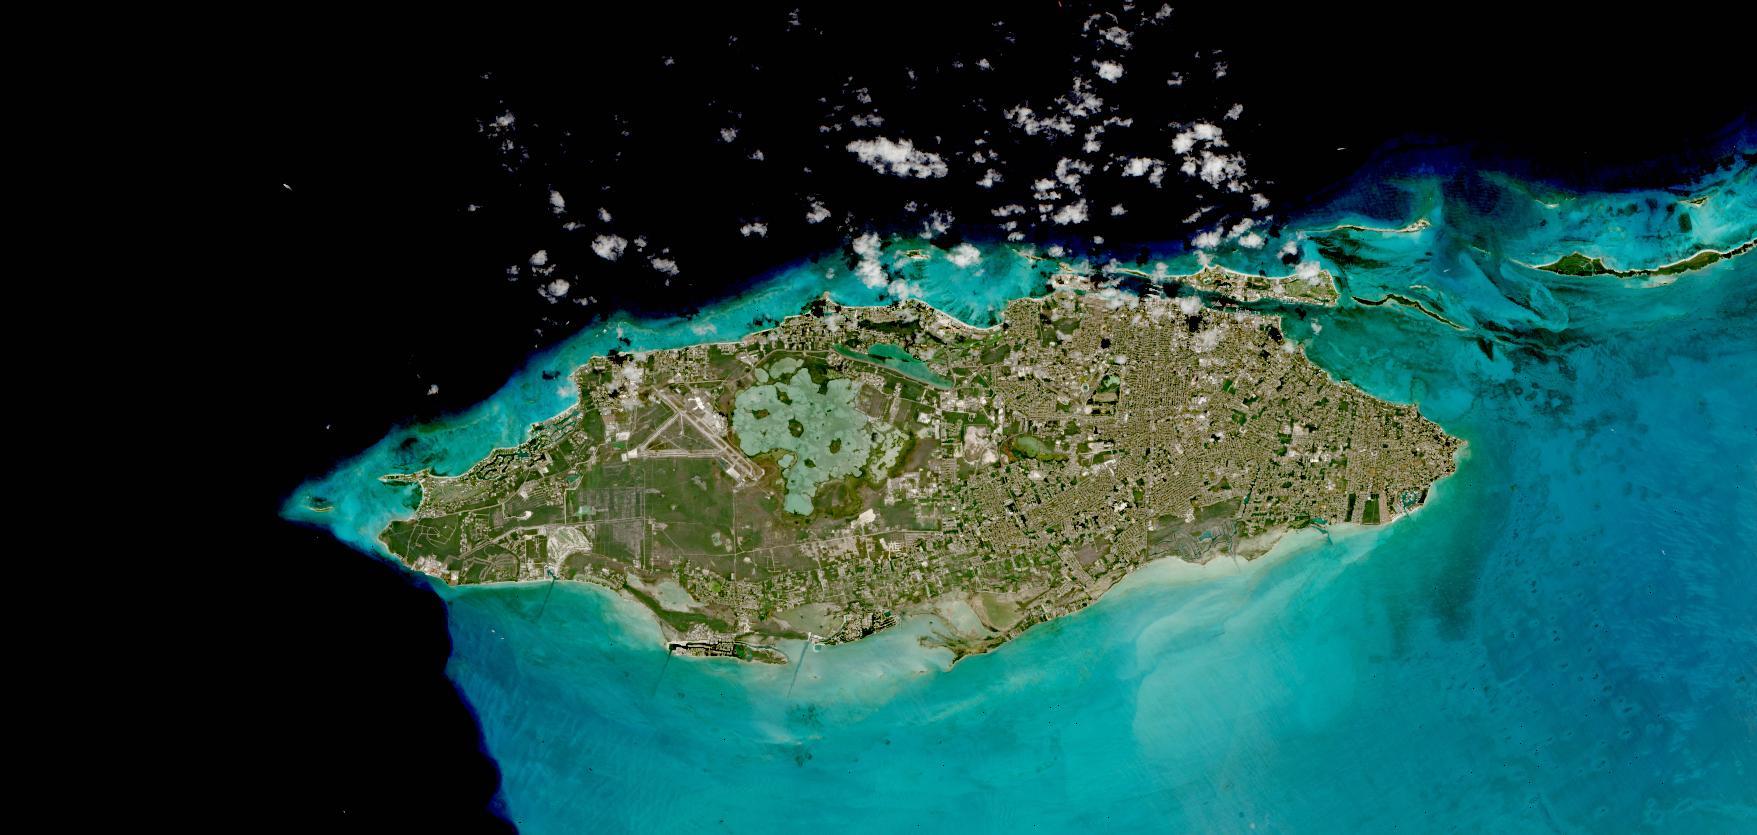 Nassau, New Providence Island, Bahamas on 18 March 2021 (Sentinel 2A & B/MSI)